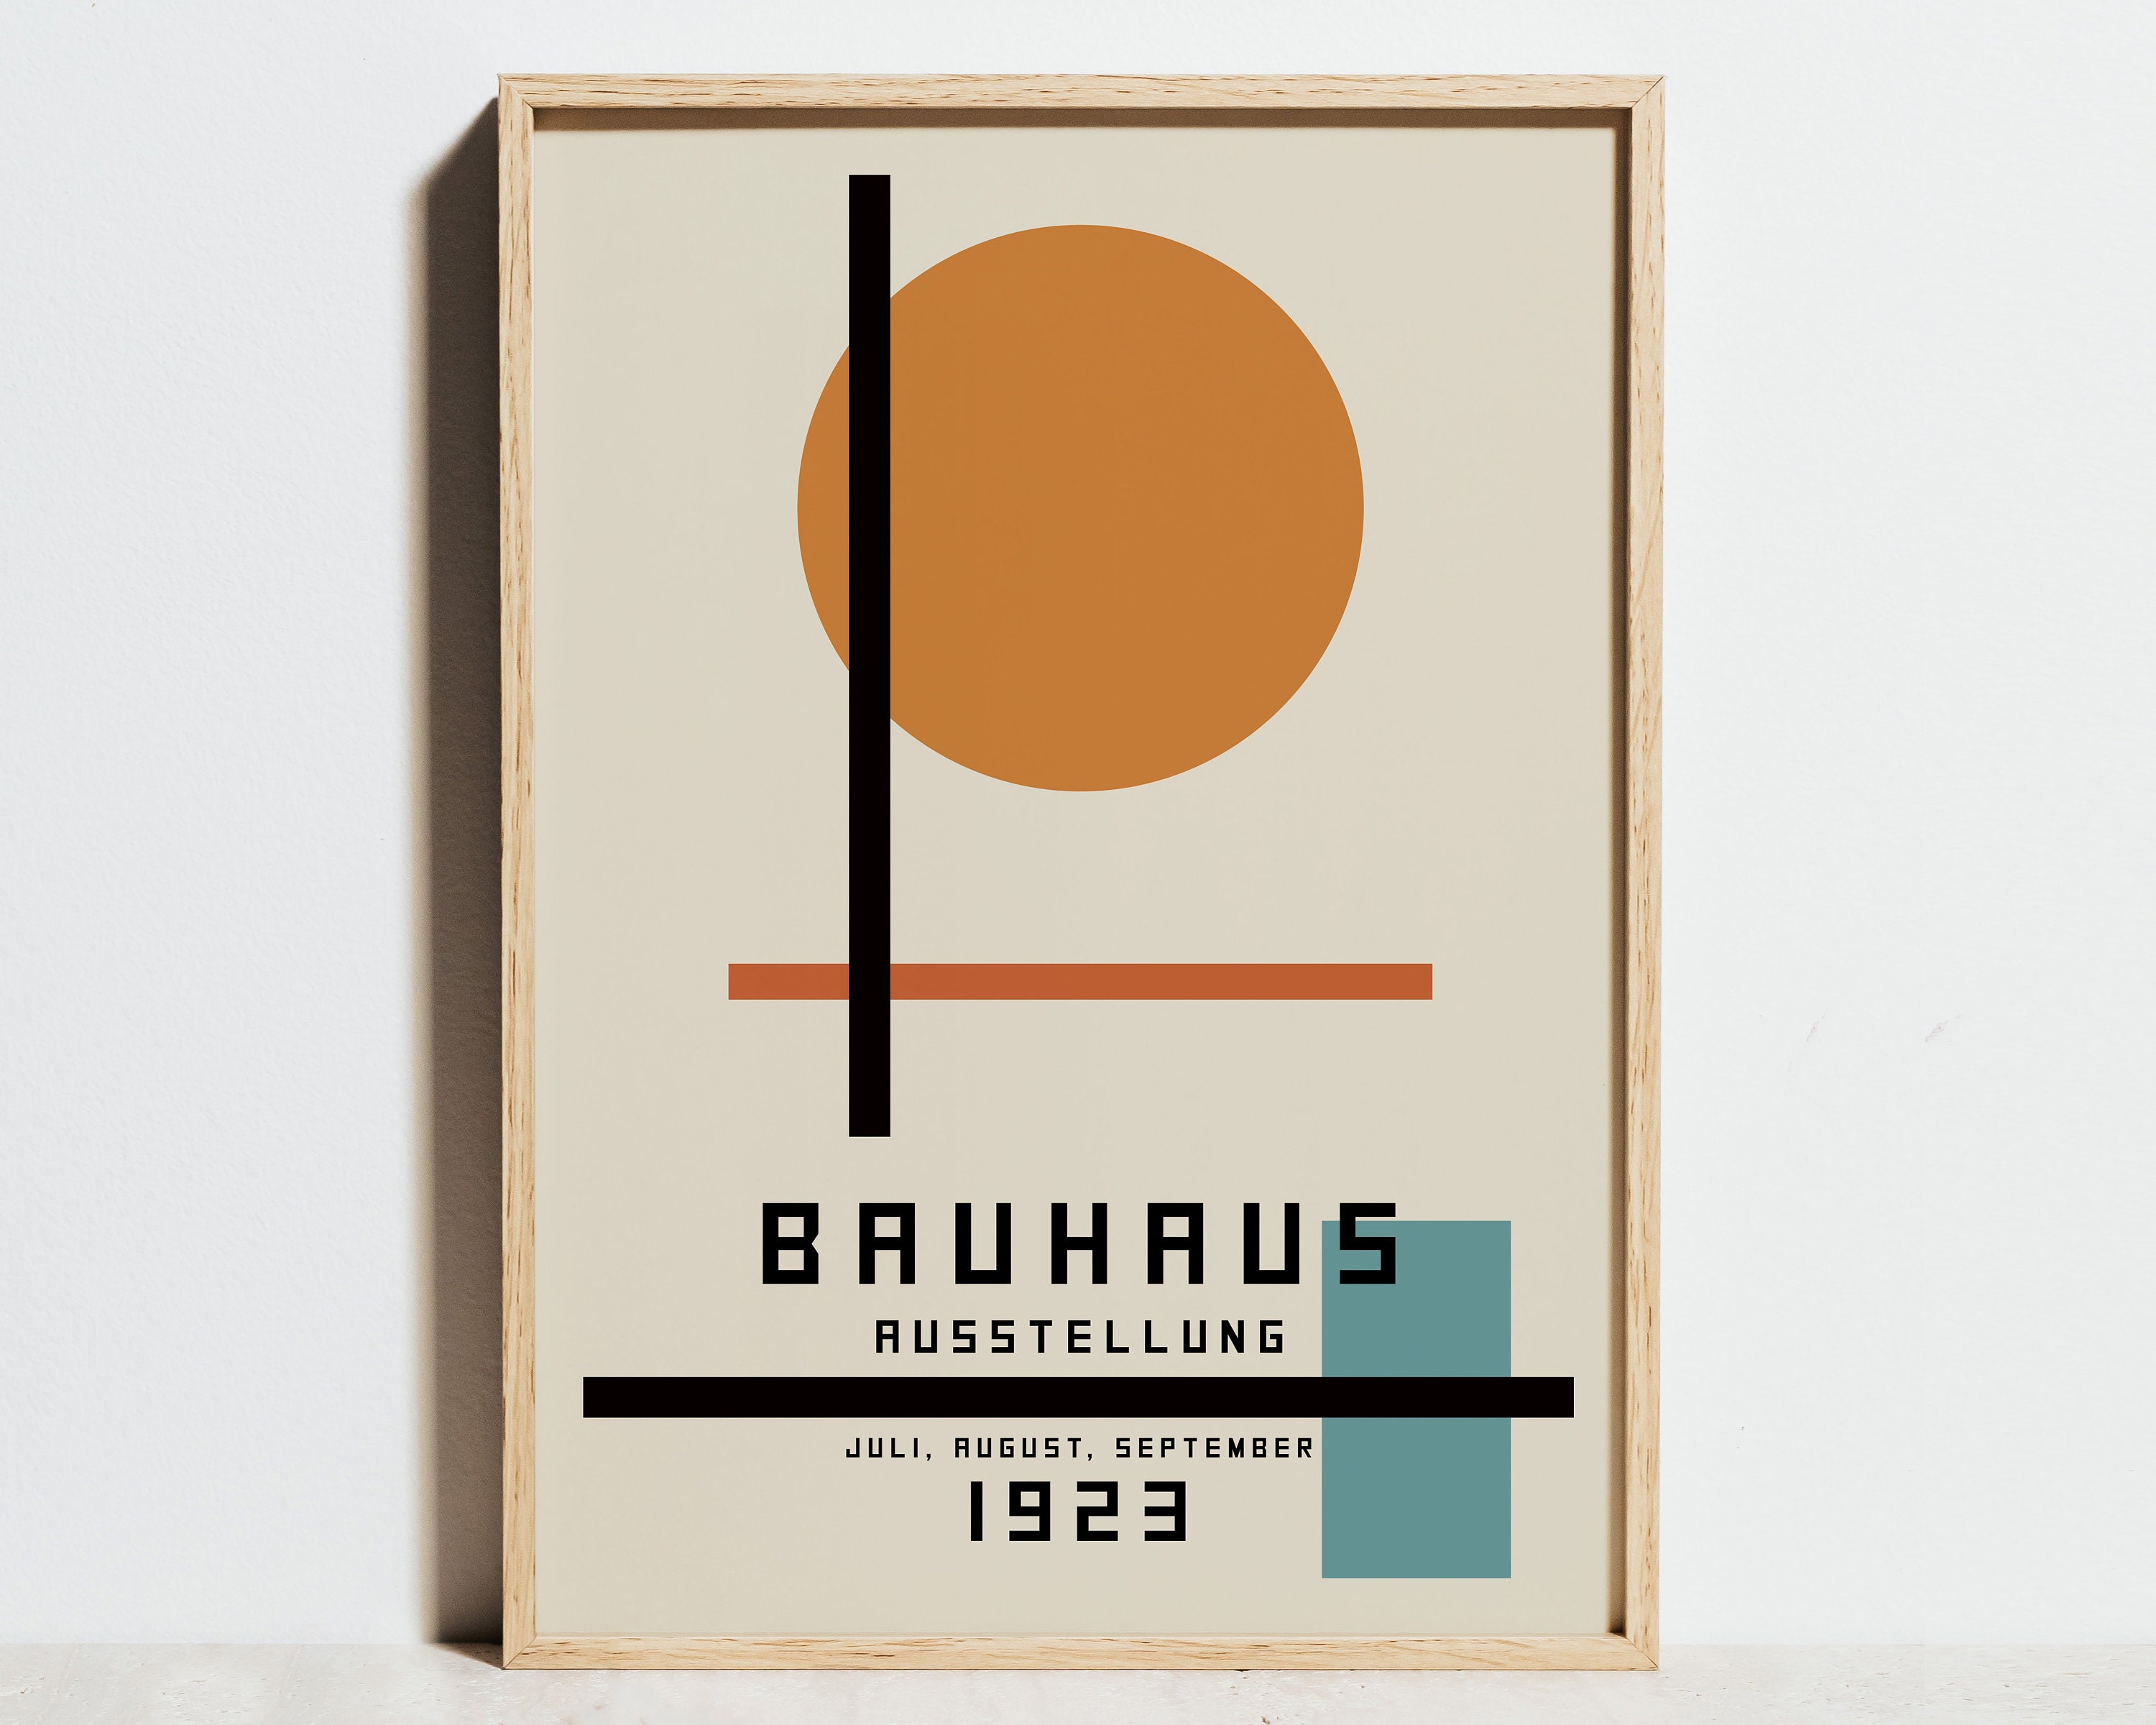 Bauhaus Print, 1923 Exhibition Poster, Circle Line Geometric Decor